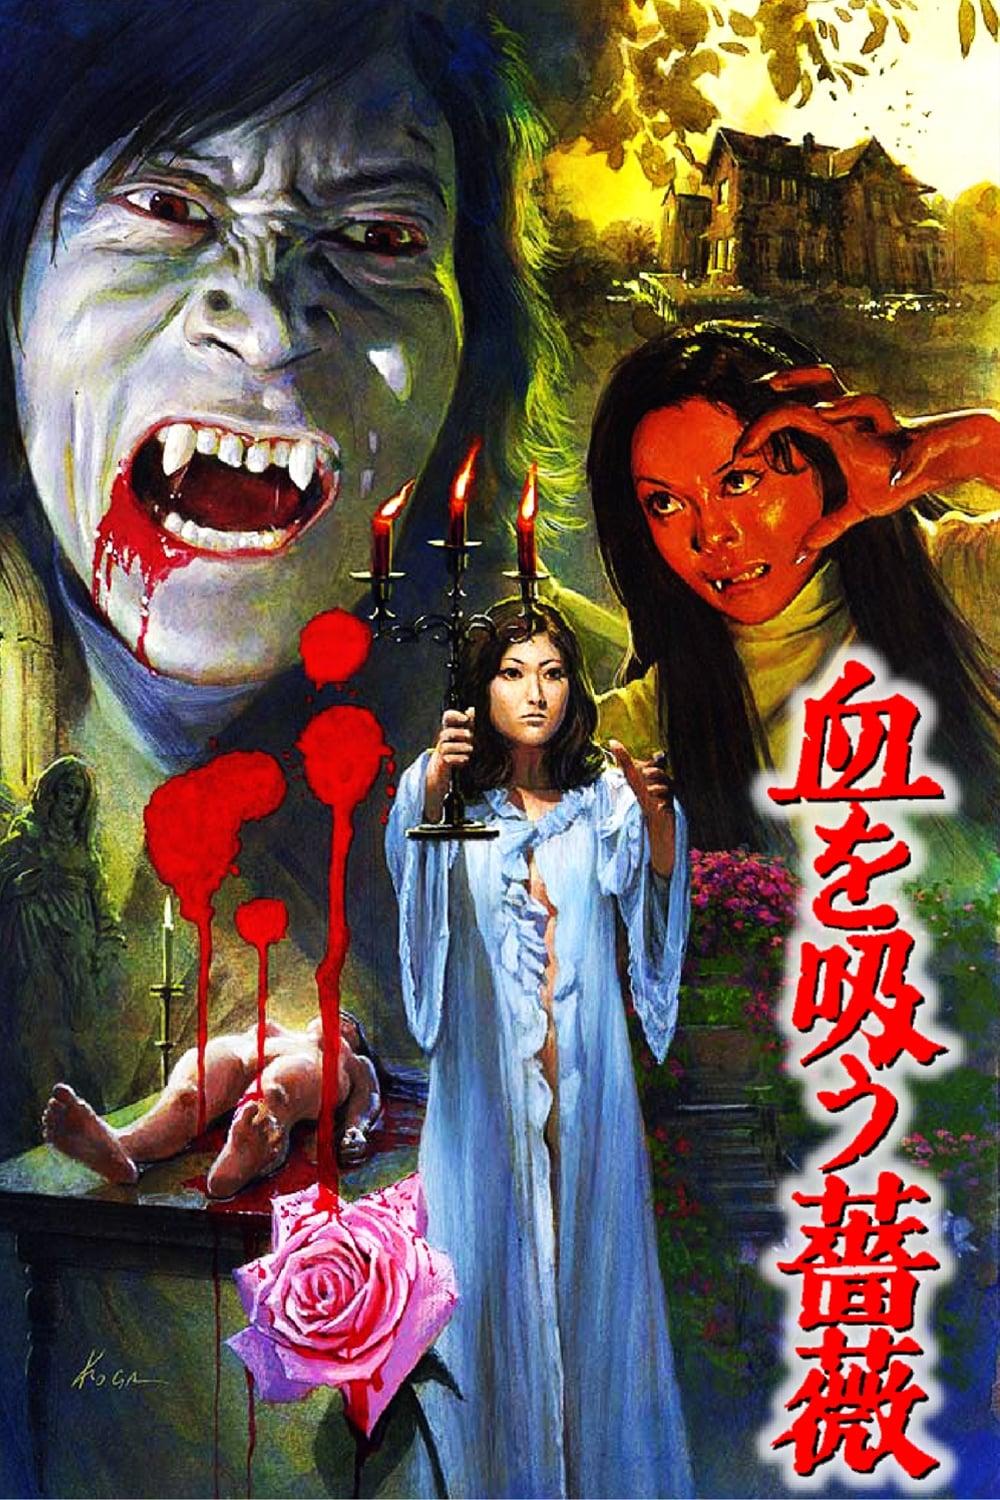 Evil of Dracula poster